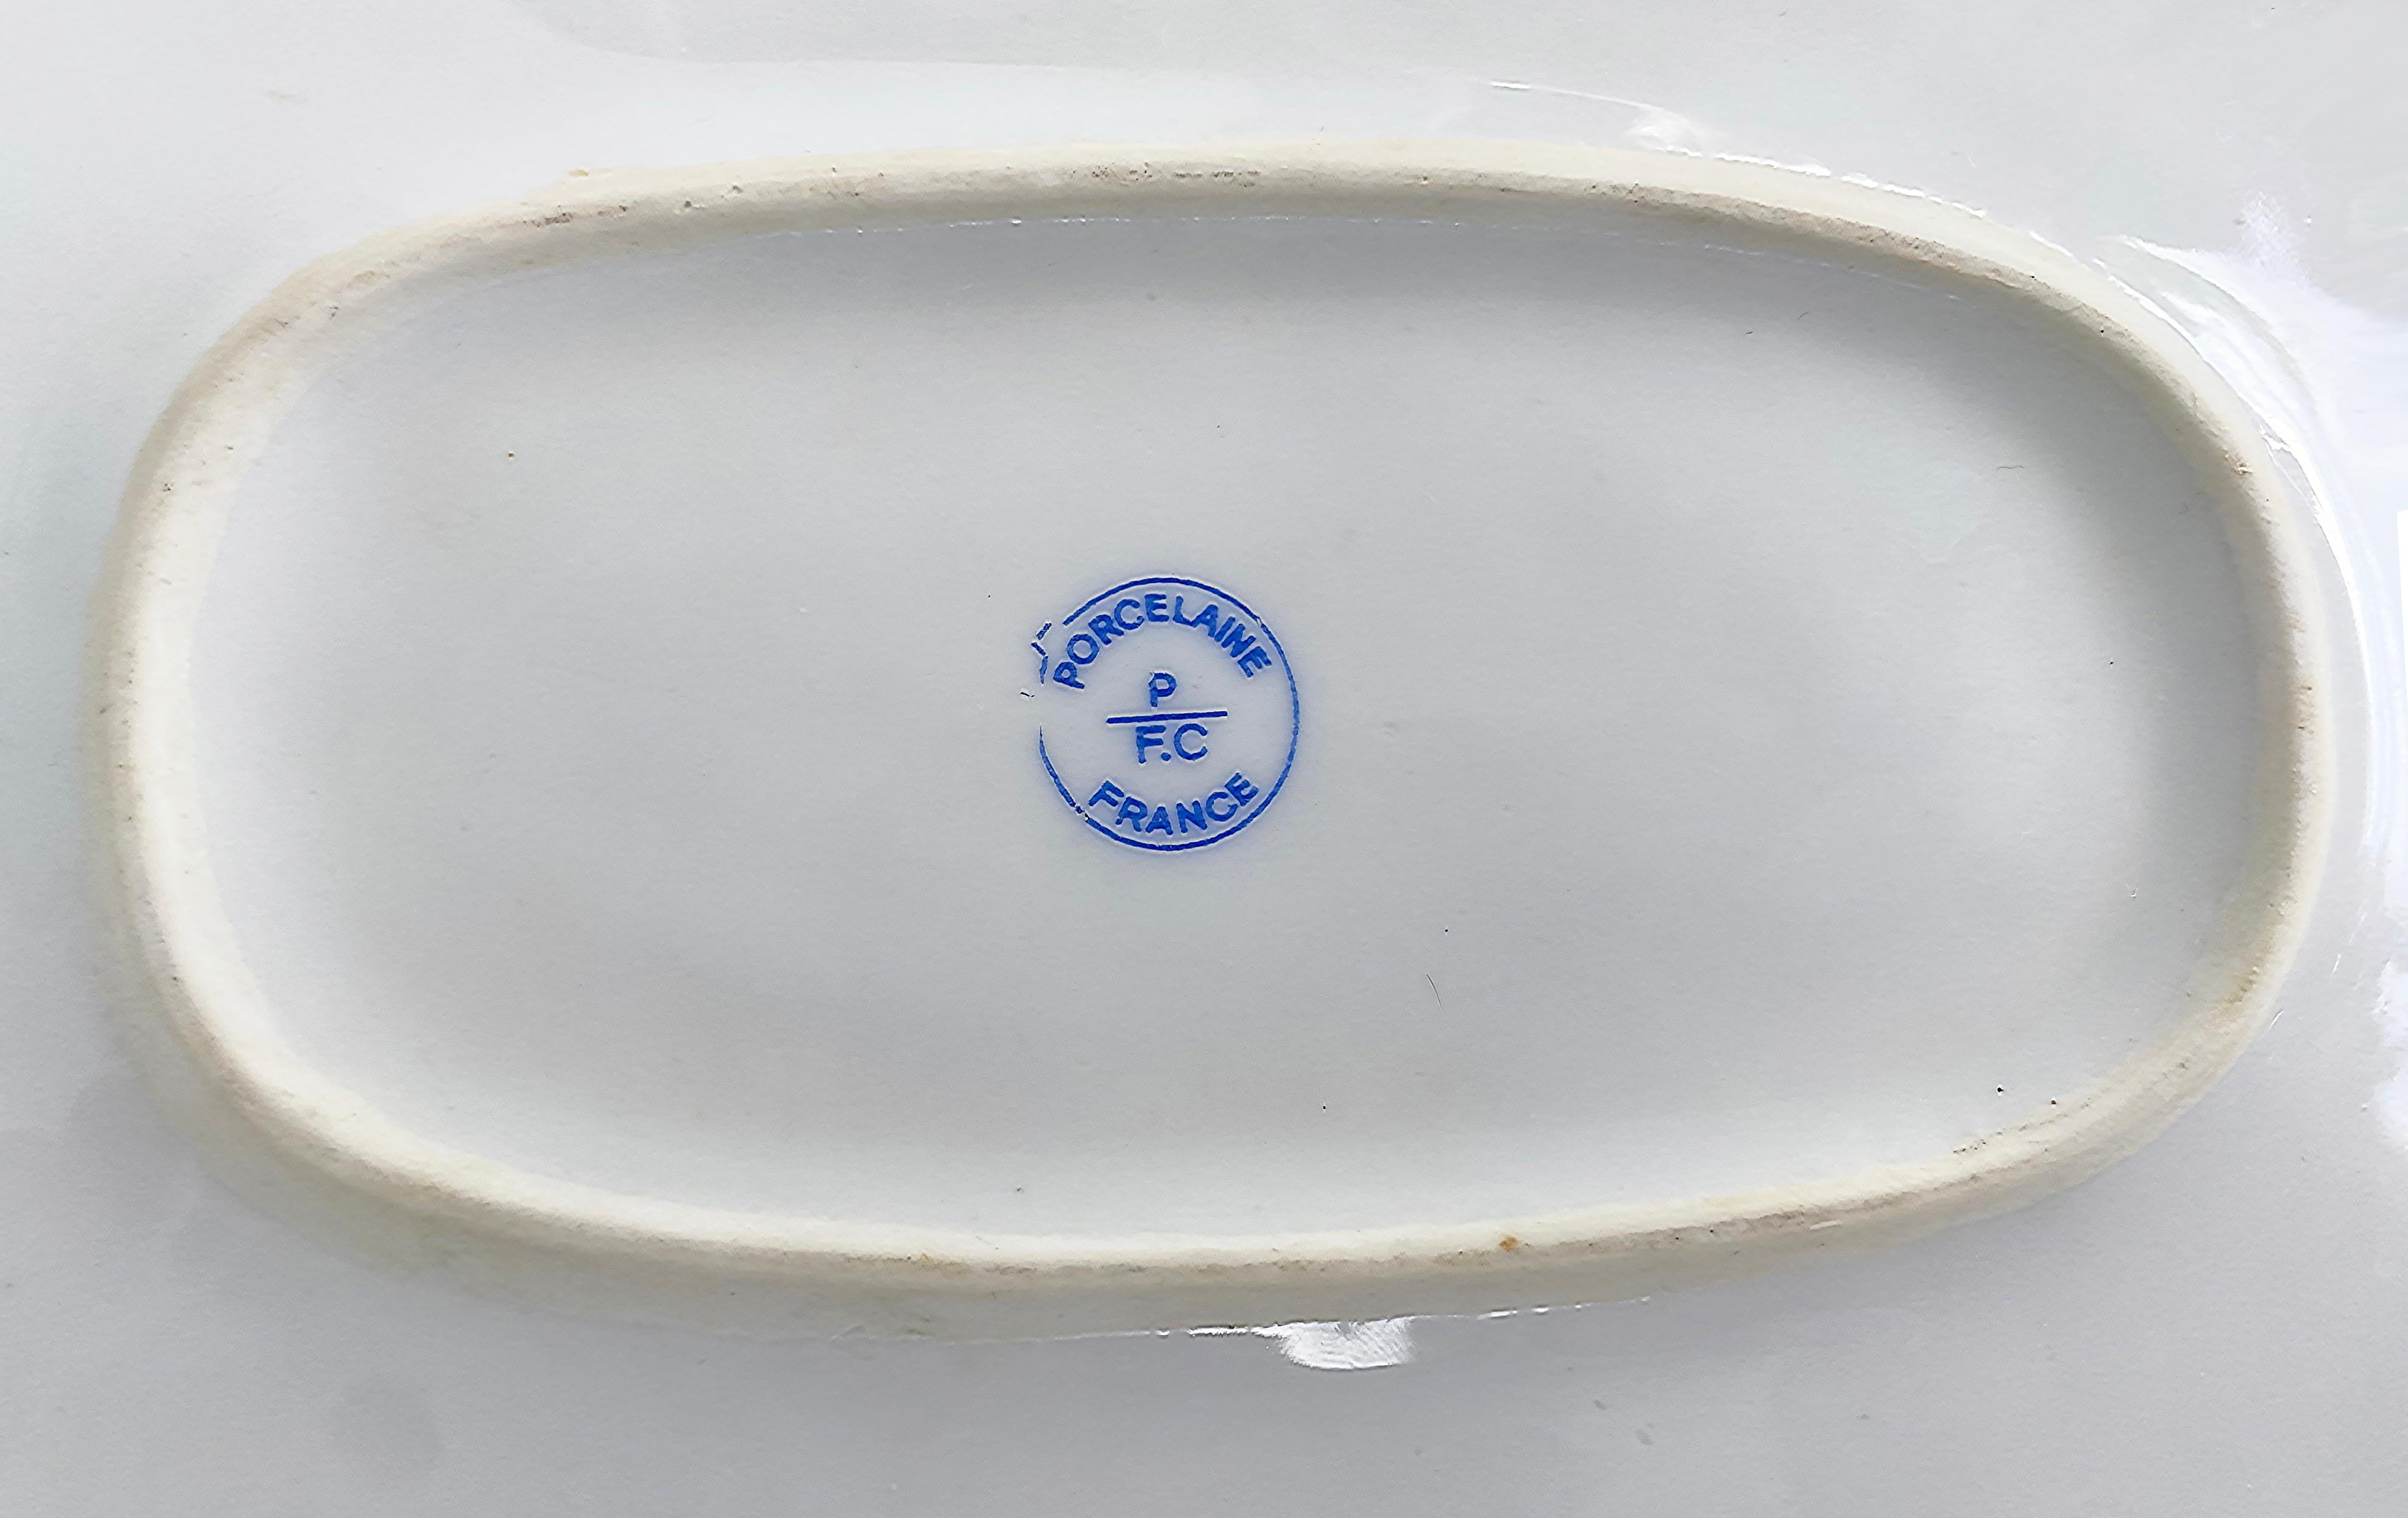 Vintage French Porcelain Asparagus Tray, Removable Cork Acorns for Draining For Sale 1